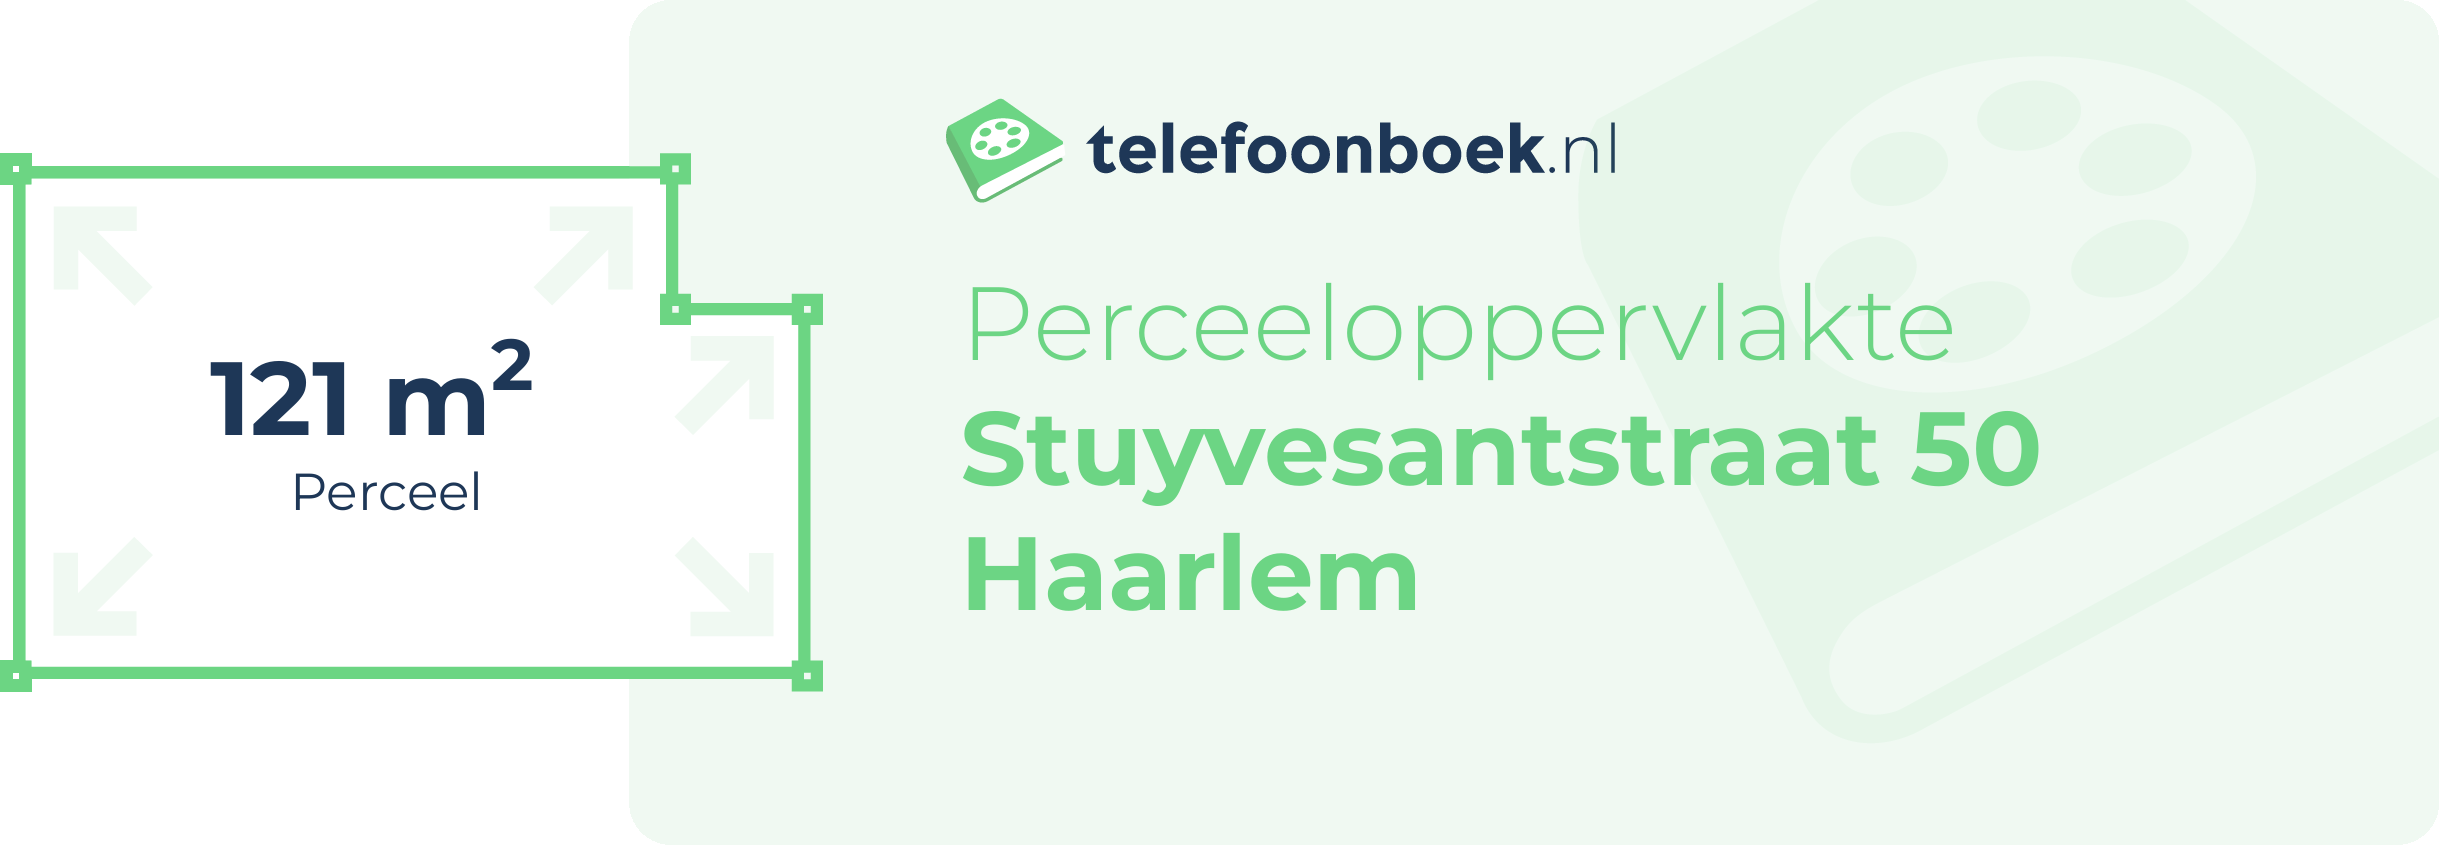 Perceeloppervlakte Stuyvesantstraat 50 Haarlem